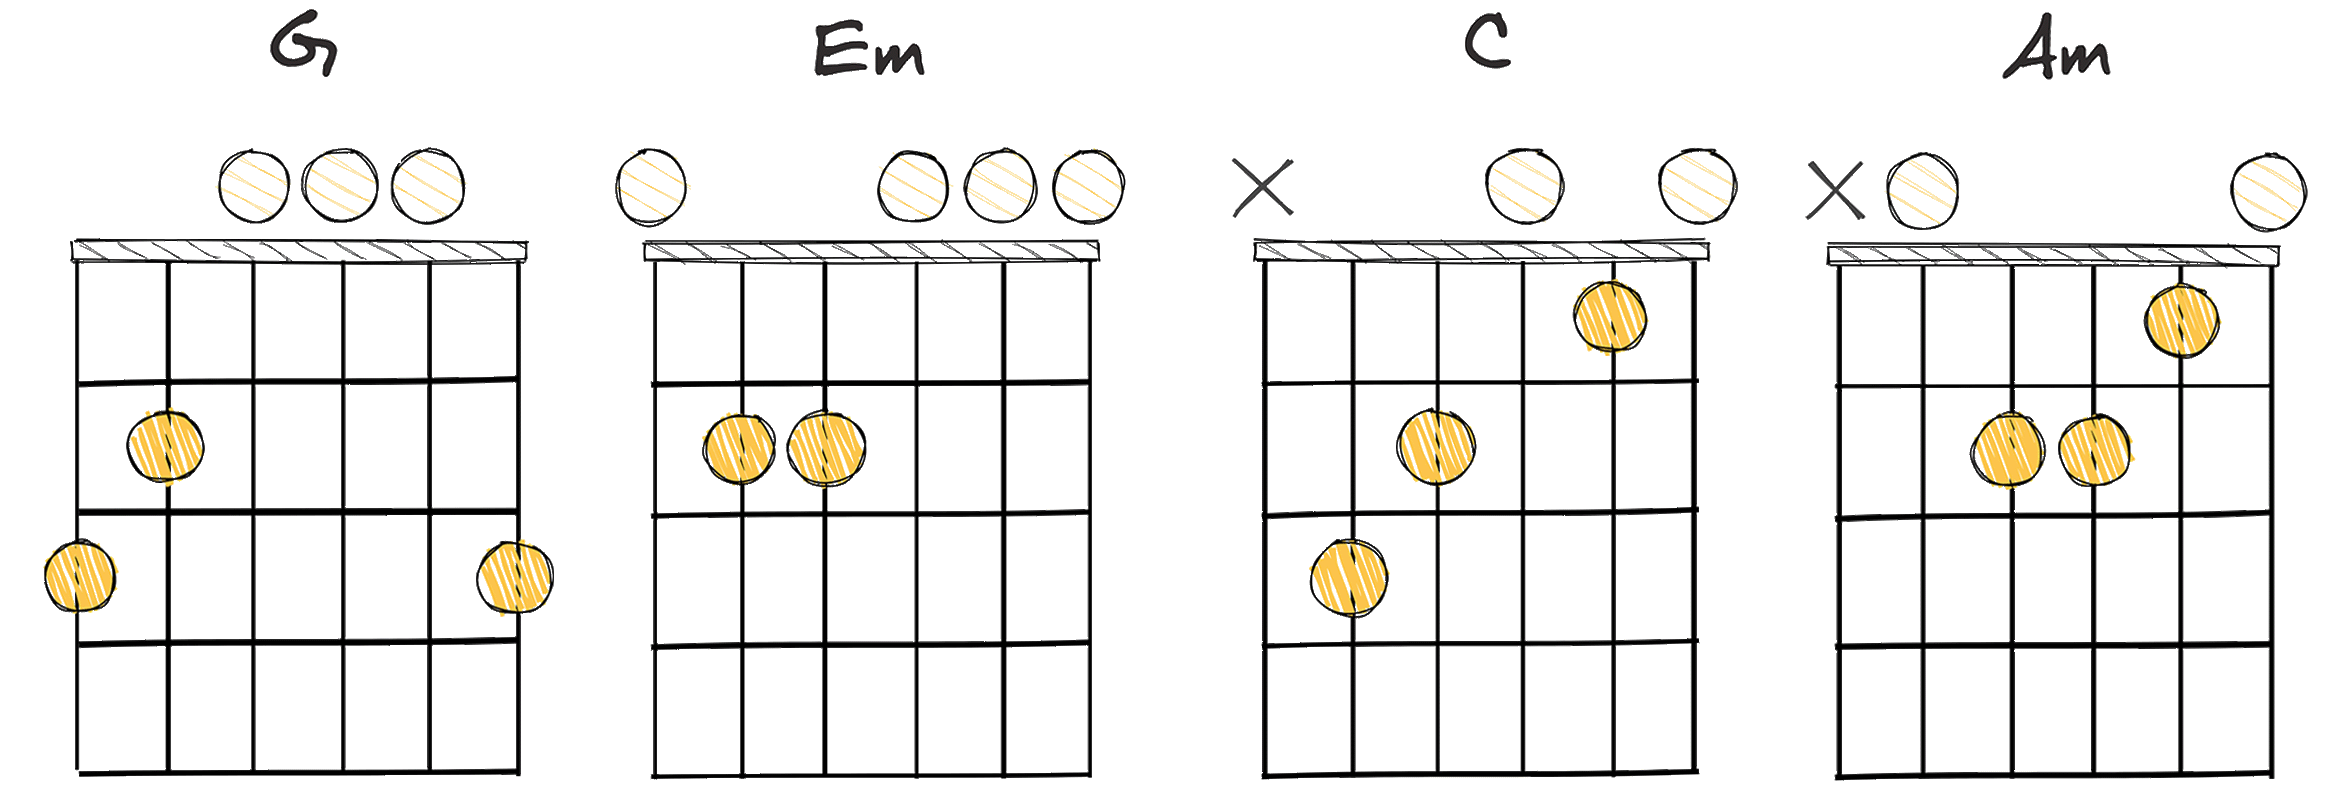 I-vi-IV-ii (1-6-4-2) chords diagram